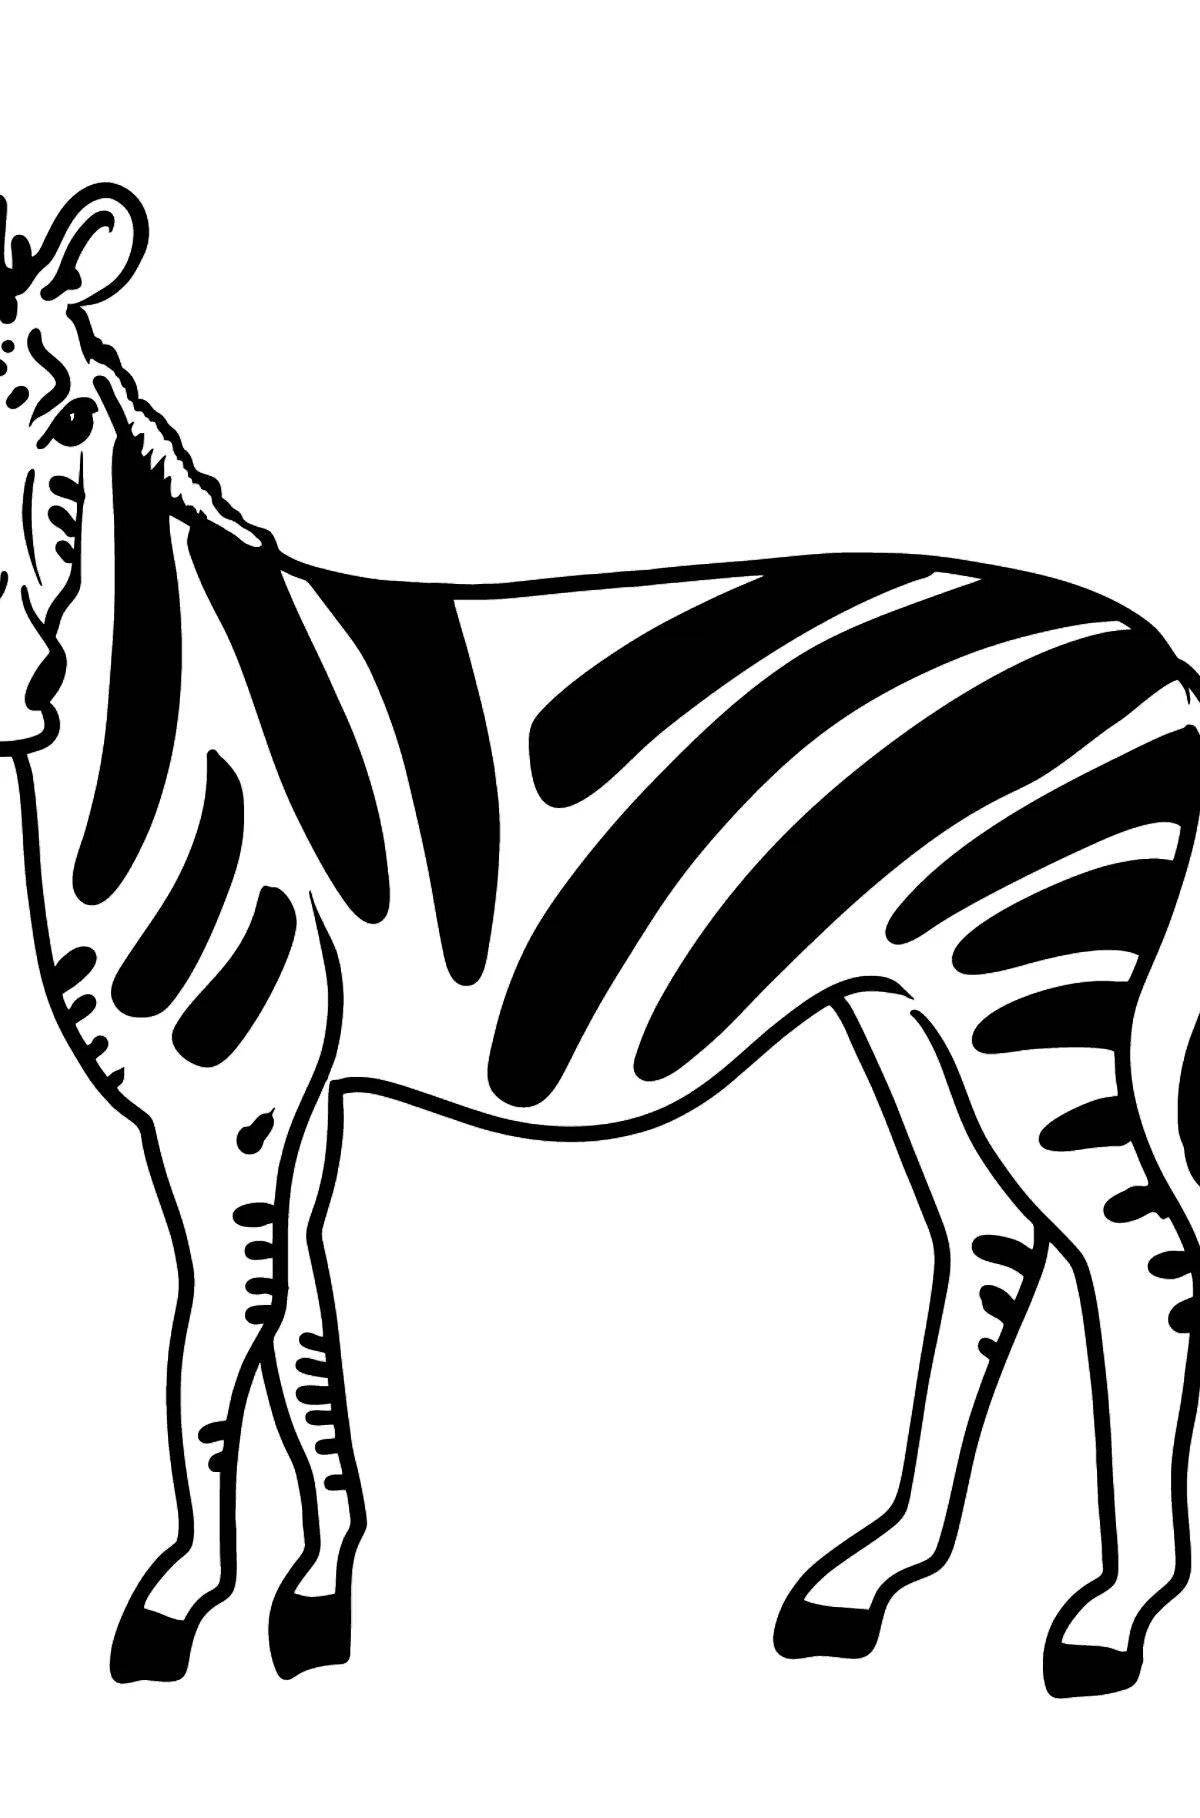 Zebra pattern #2